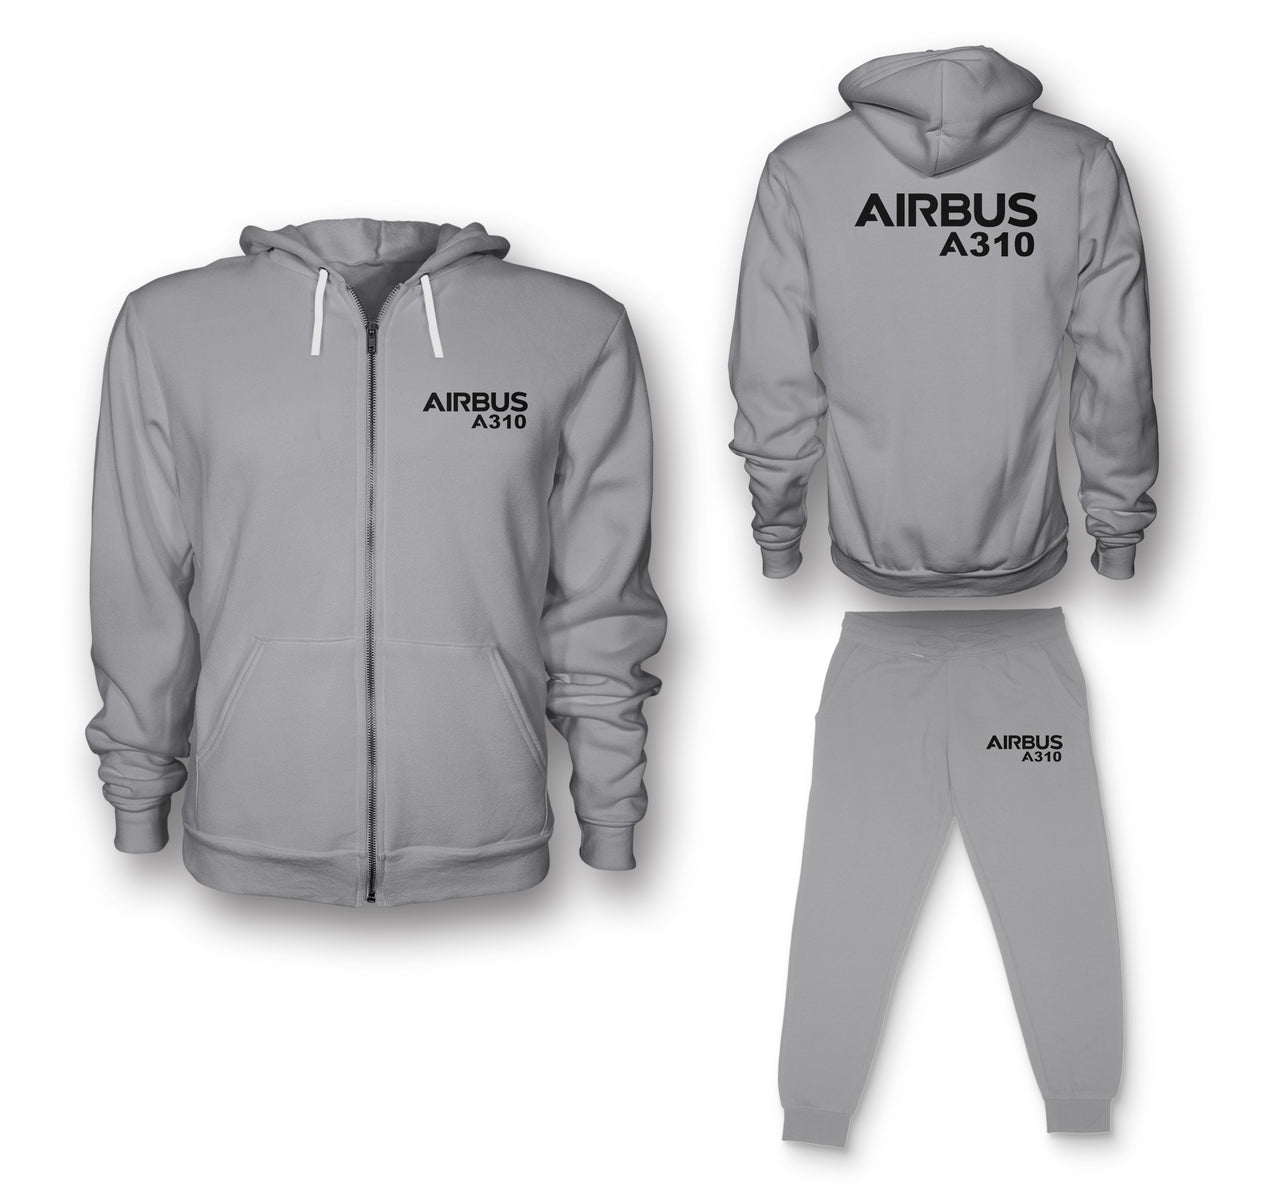 Airbus A310 & Text Designed Zipped Hoodies & Sweatpants Set